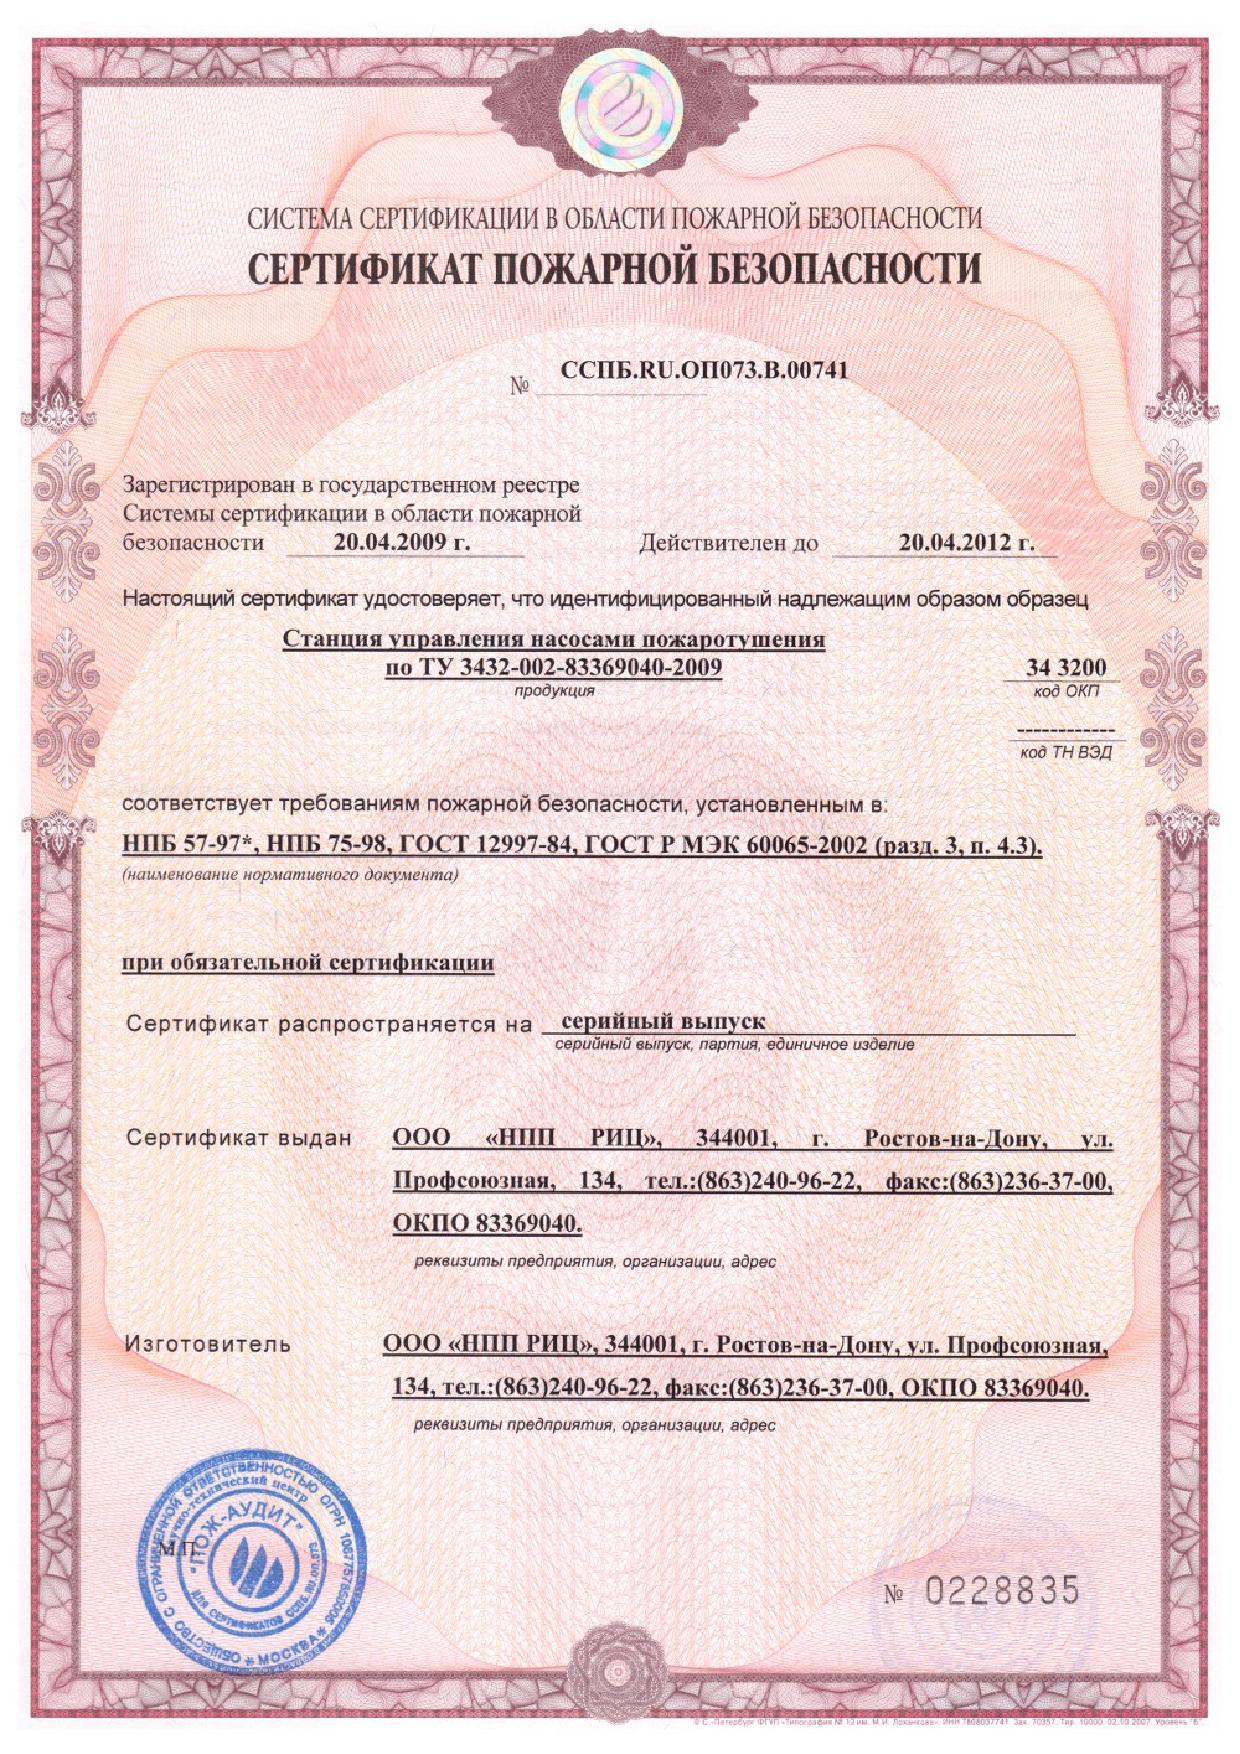 2009-04-20-2012-04-20-certificate-RPF